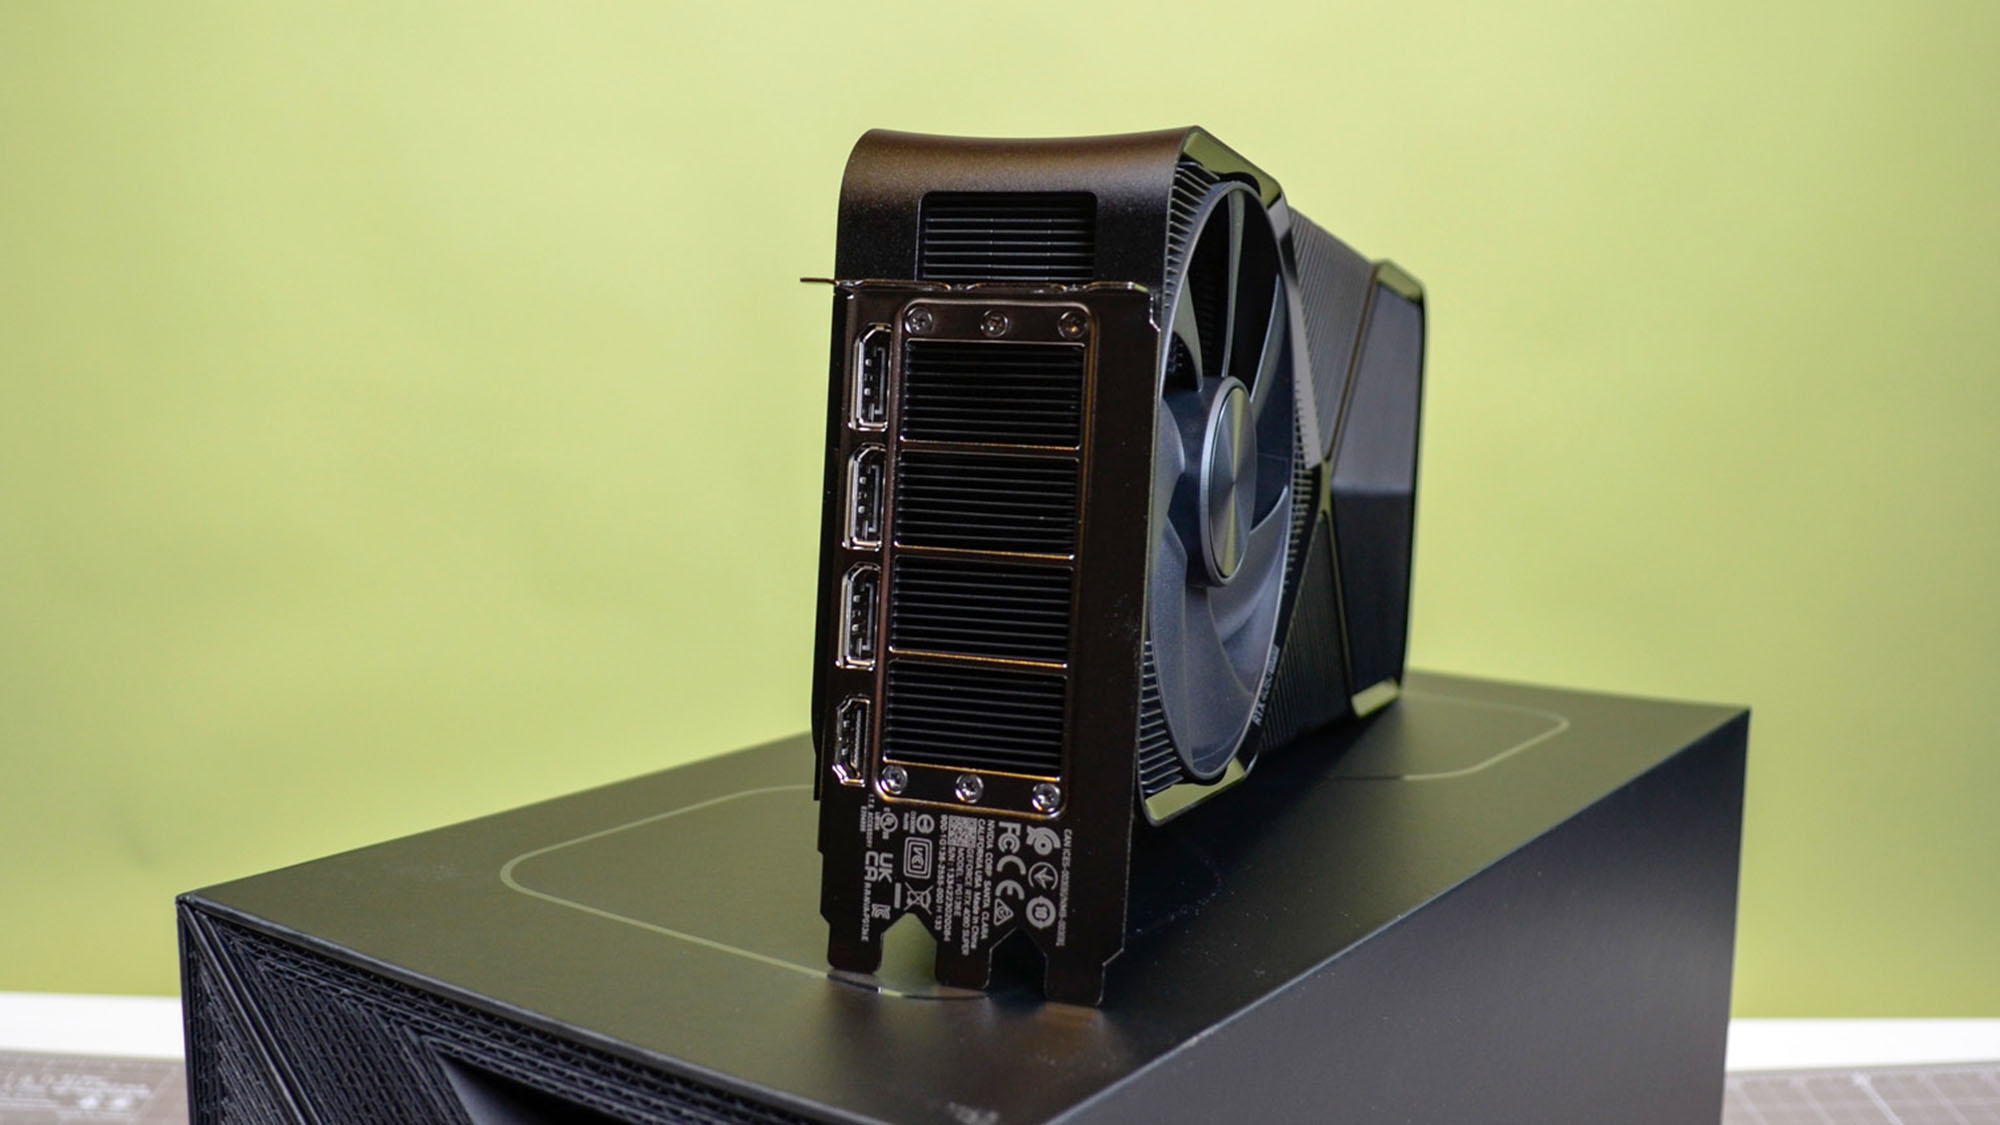 An Nvidia GeForce RTX 4080 Super on a desk